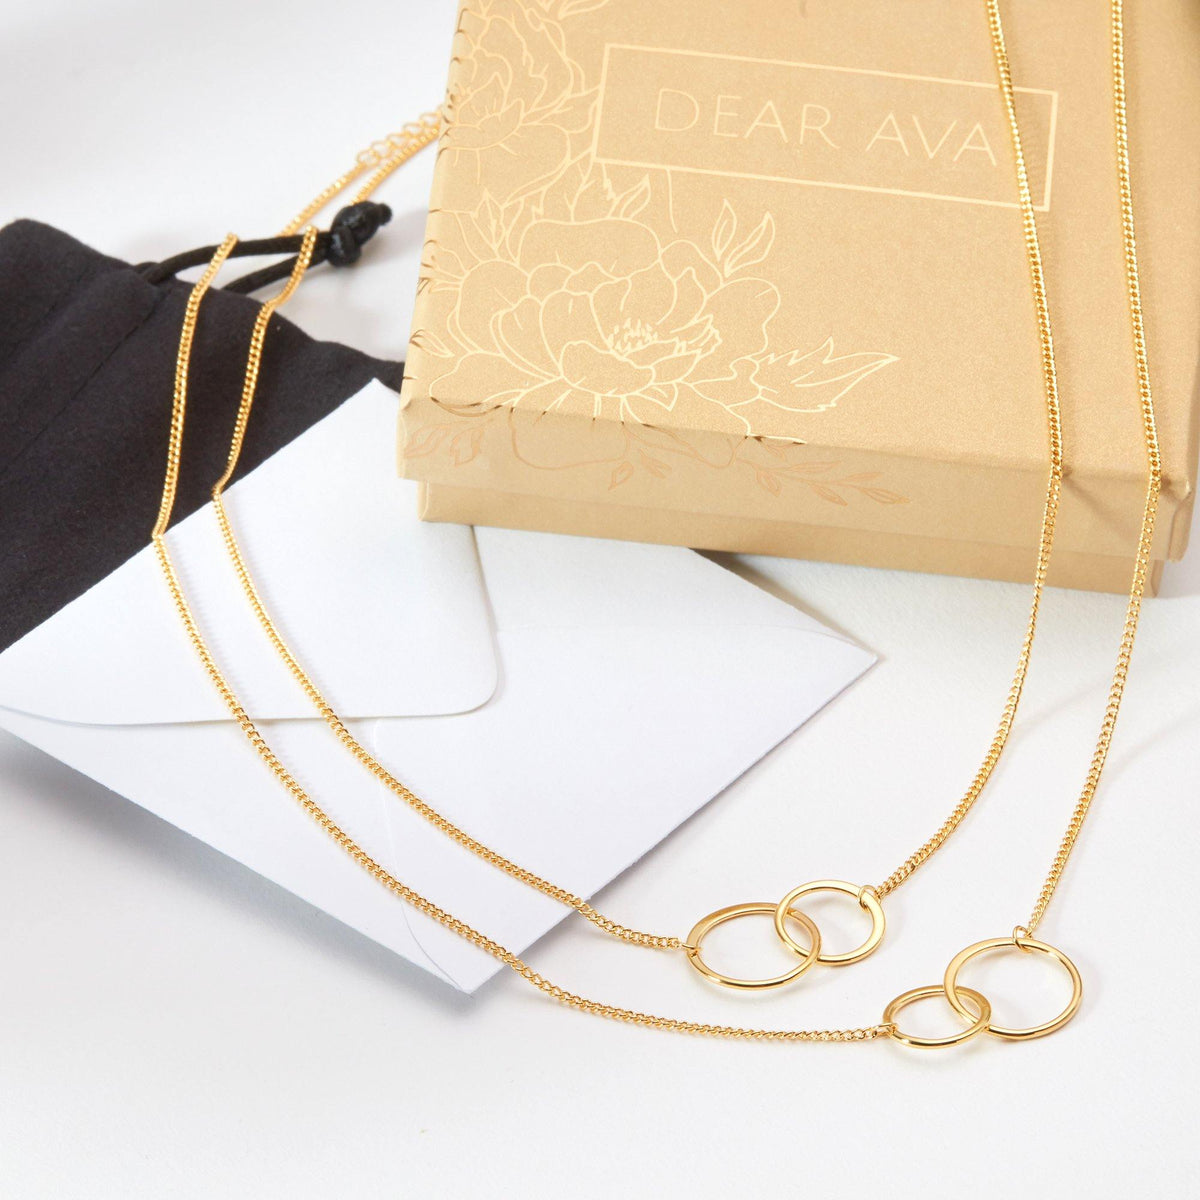 Best Friends Necklace, Multiple Styles - Dear Ava, Jewelry / Necklaces / Pendants